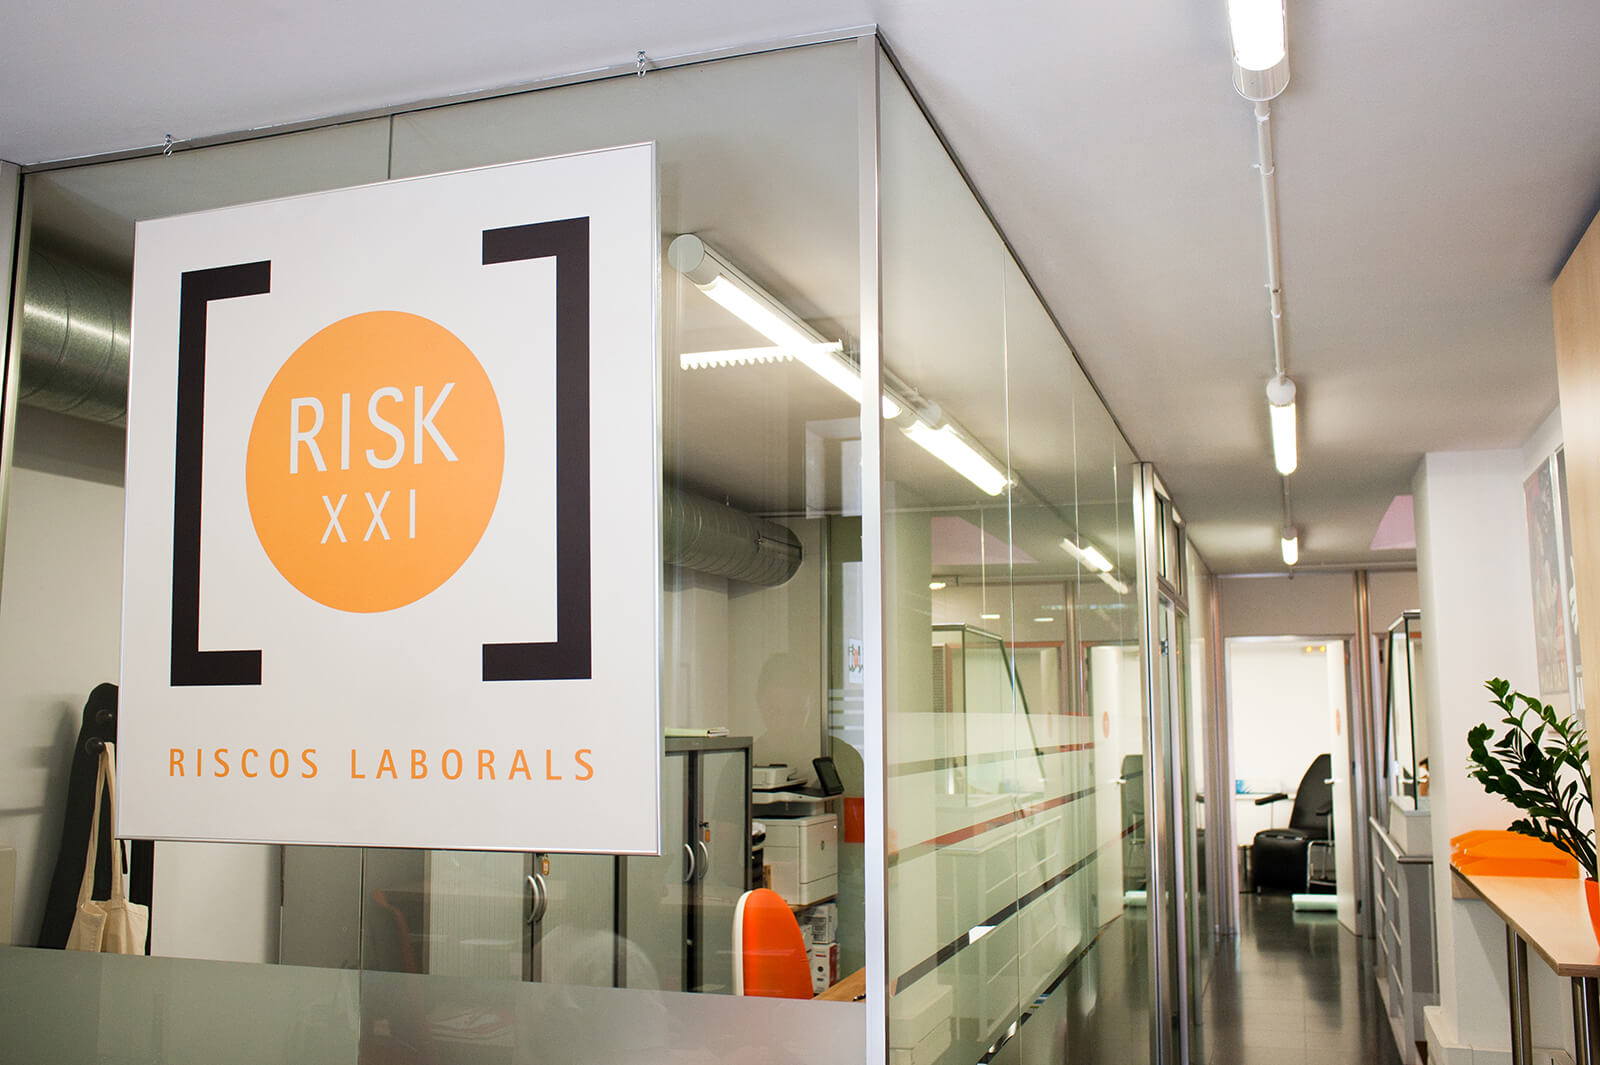 Risk XXI Prl & Services